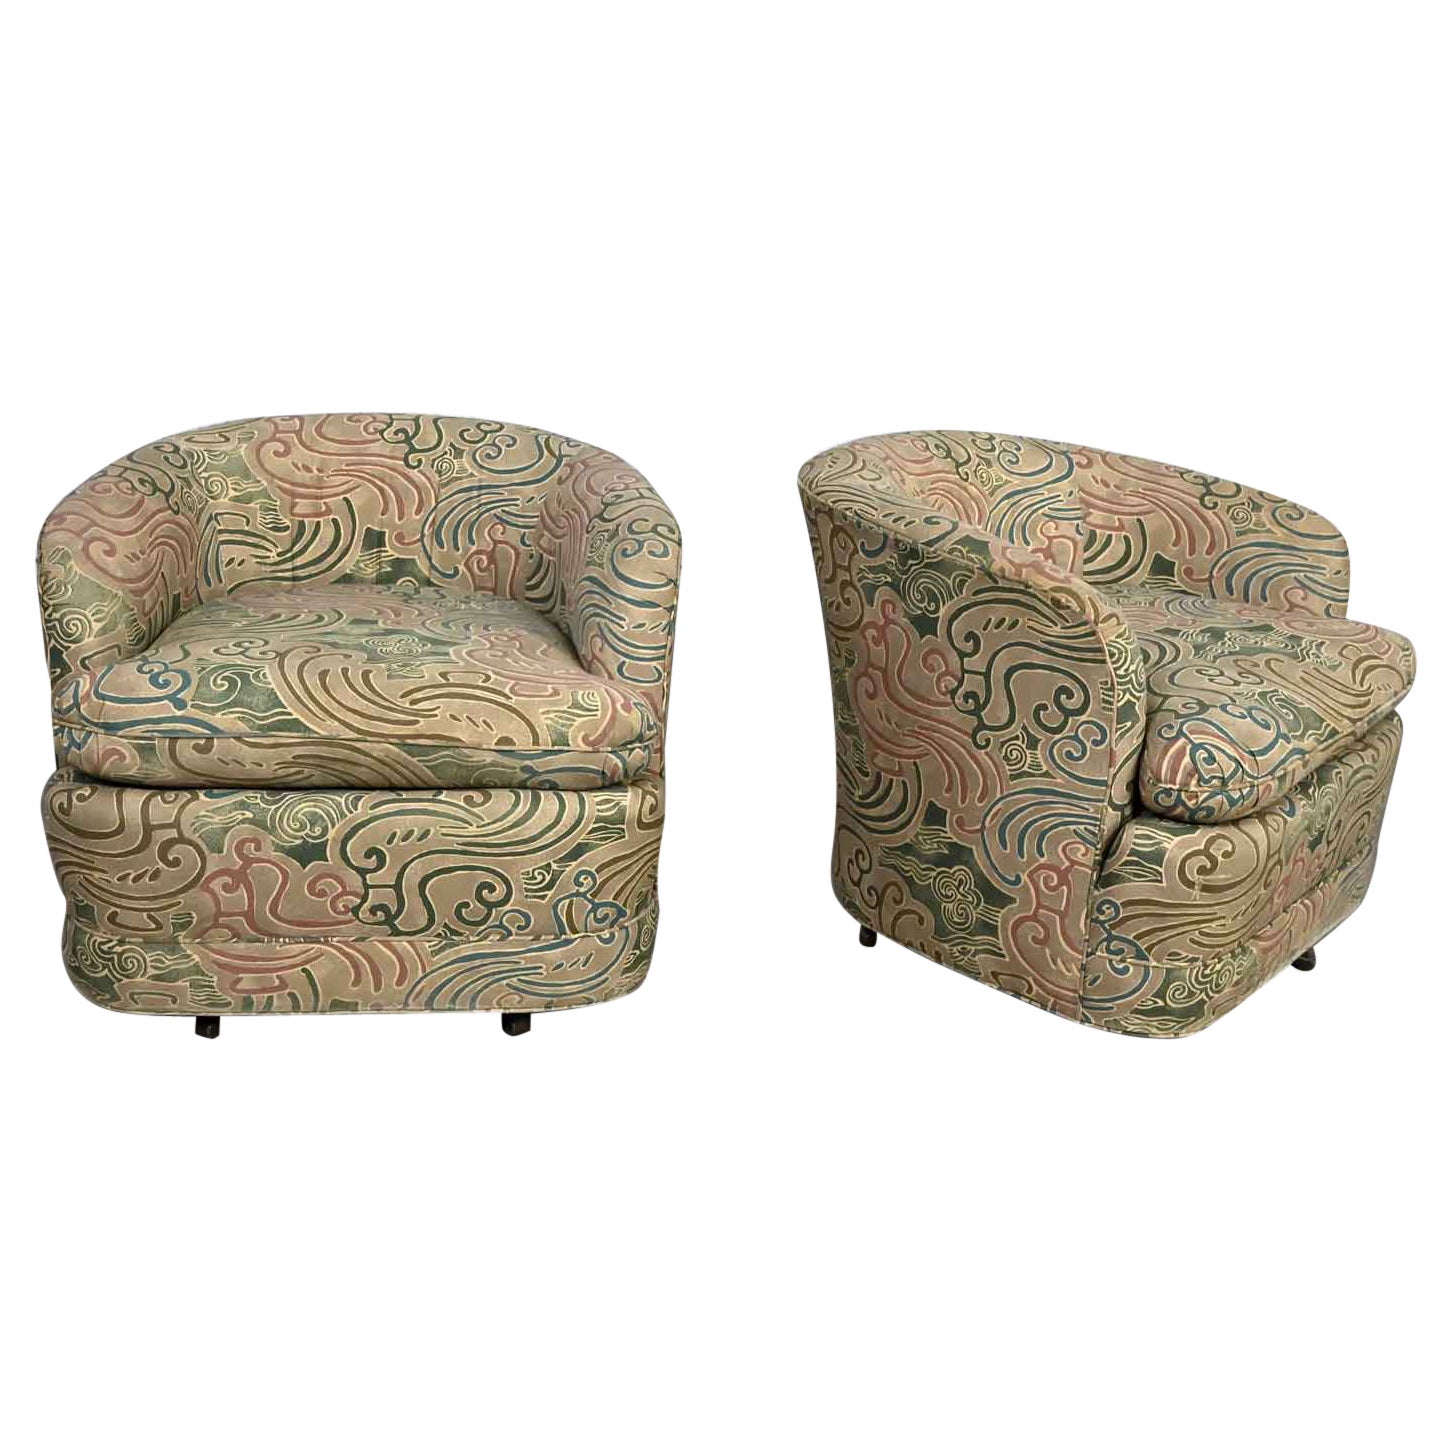 Pair Late 20th Century Modern Drexel Heritage Swivel Barrel Chairs Orig Fabric